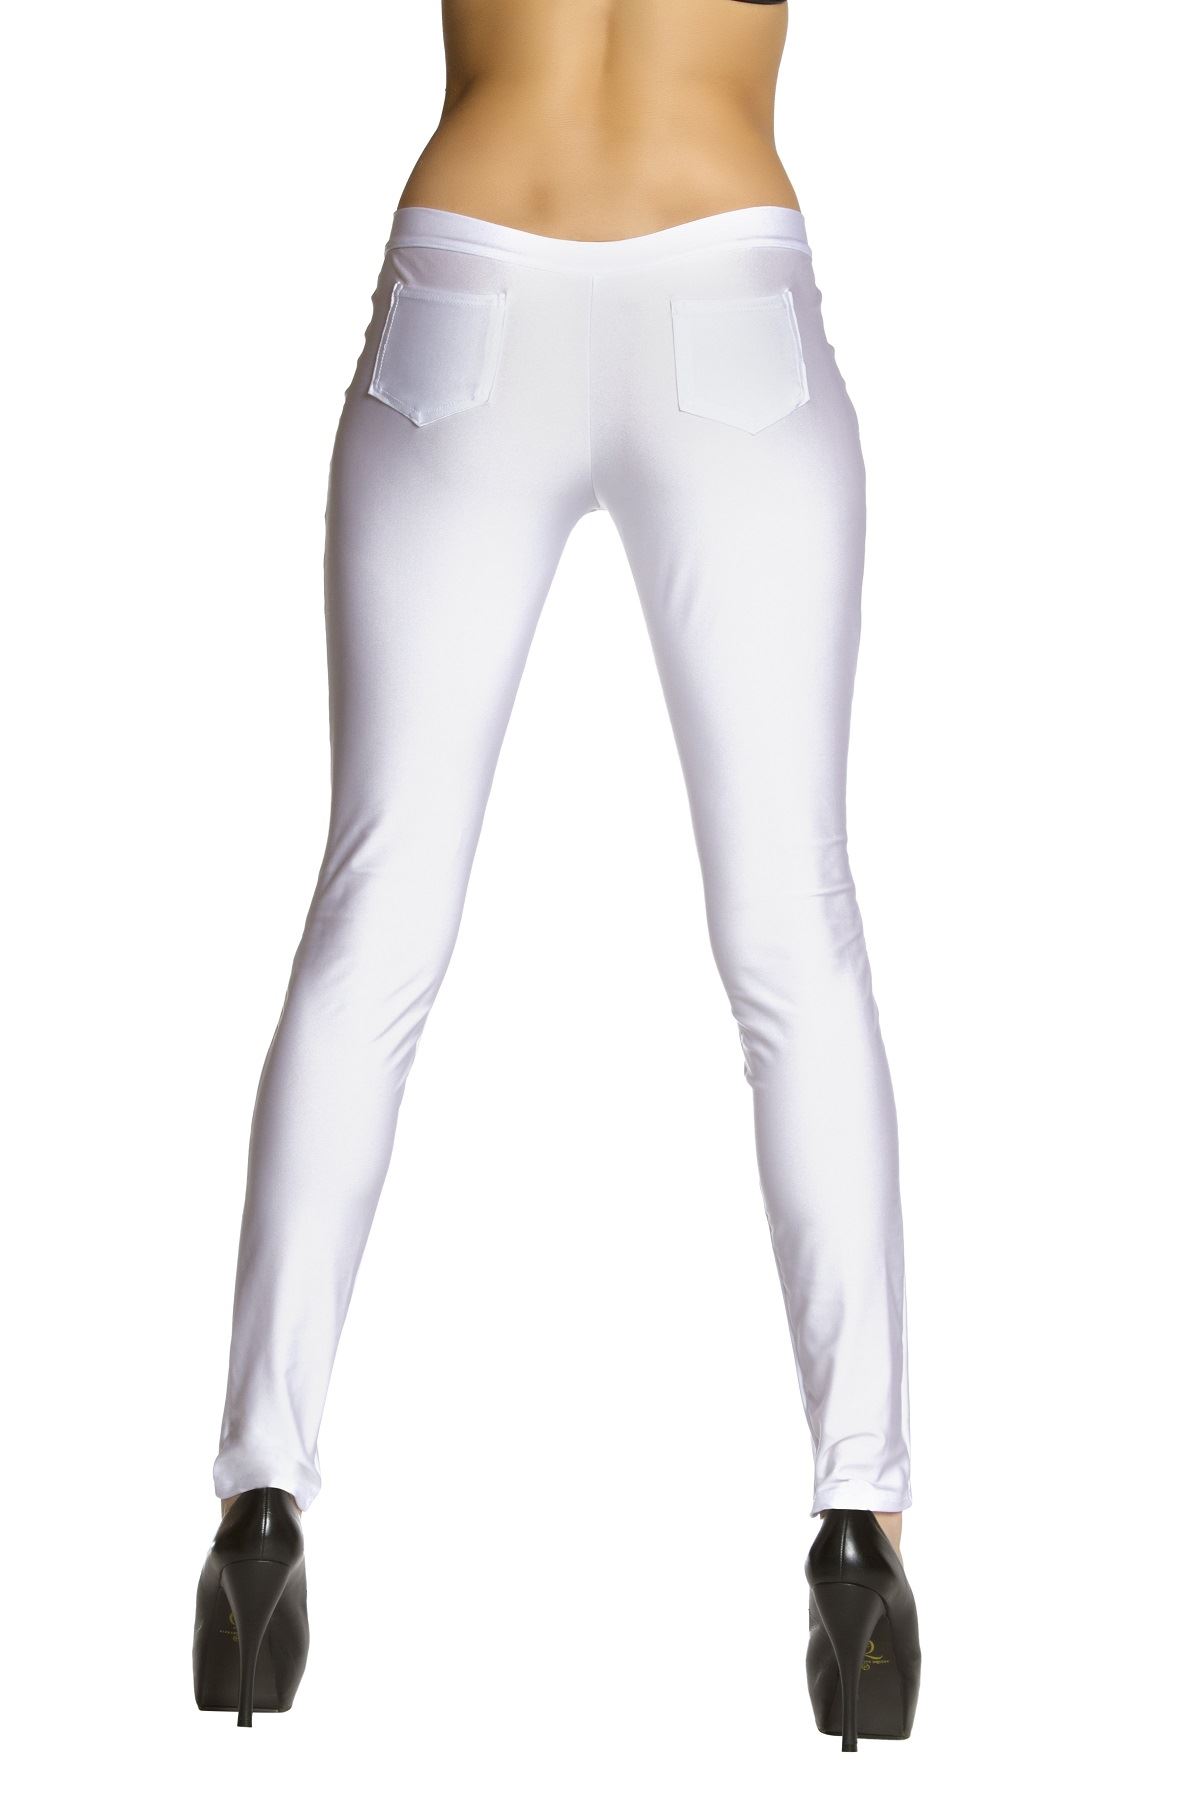 Adult White Disco 80s Women Pants, $38.99